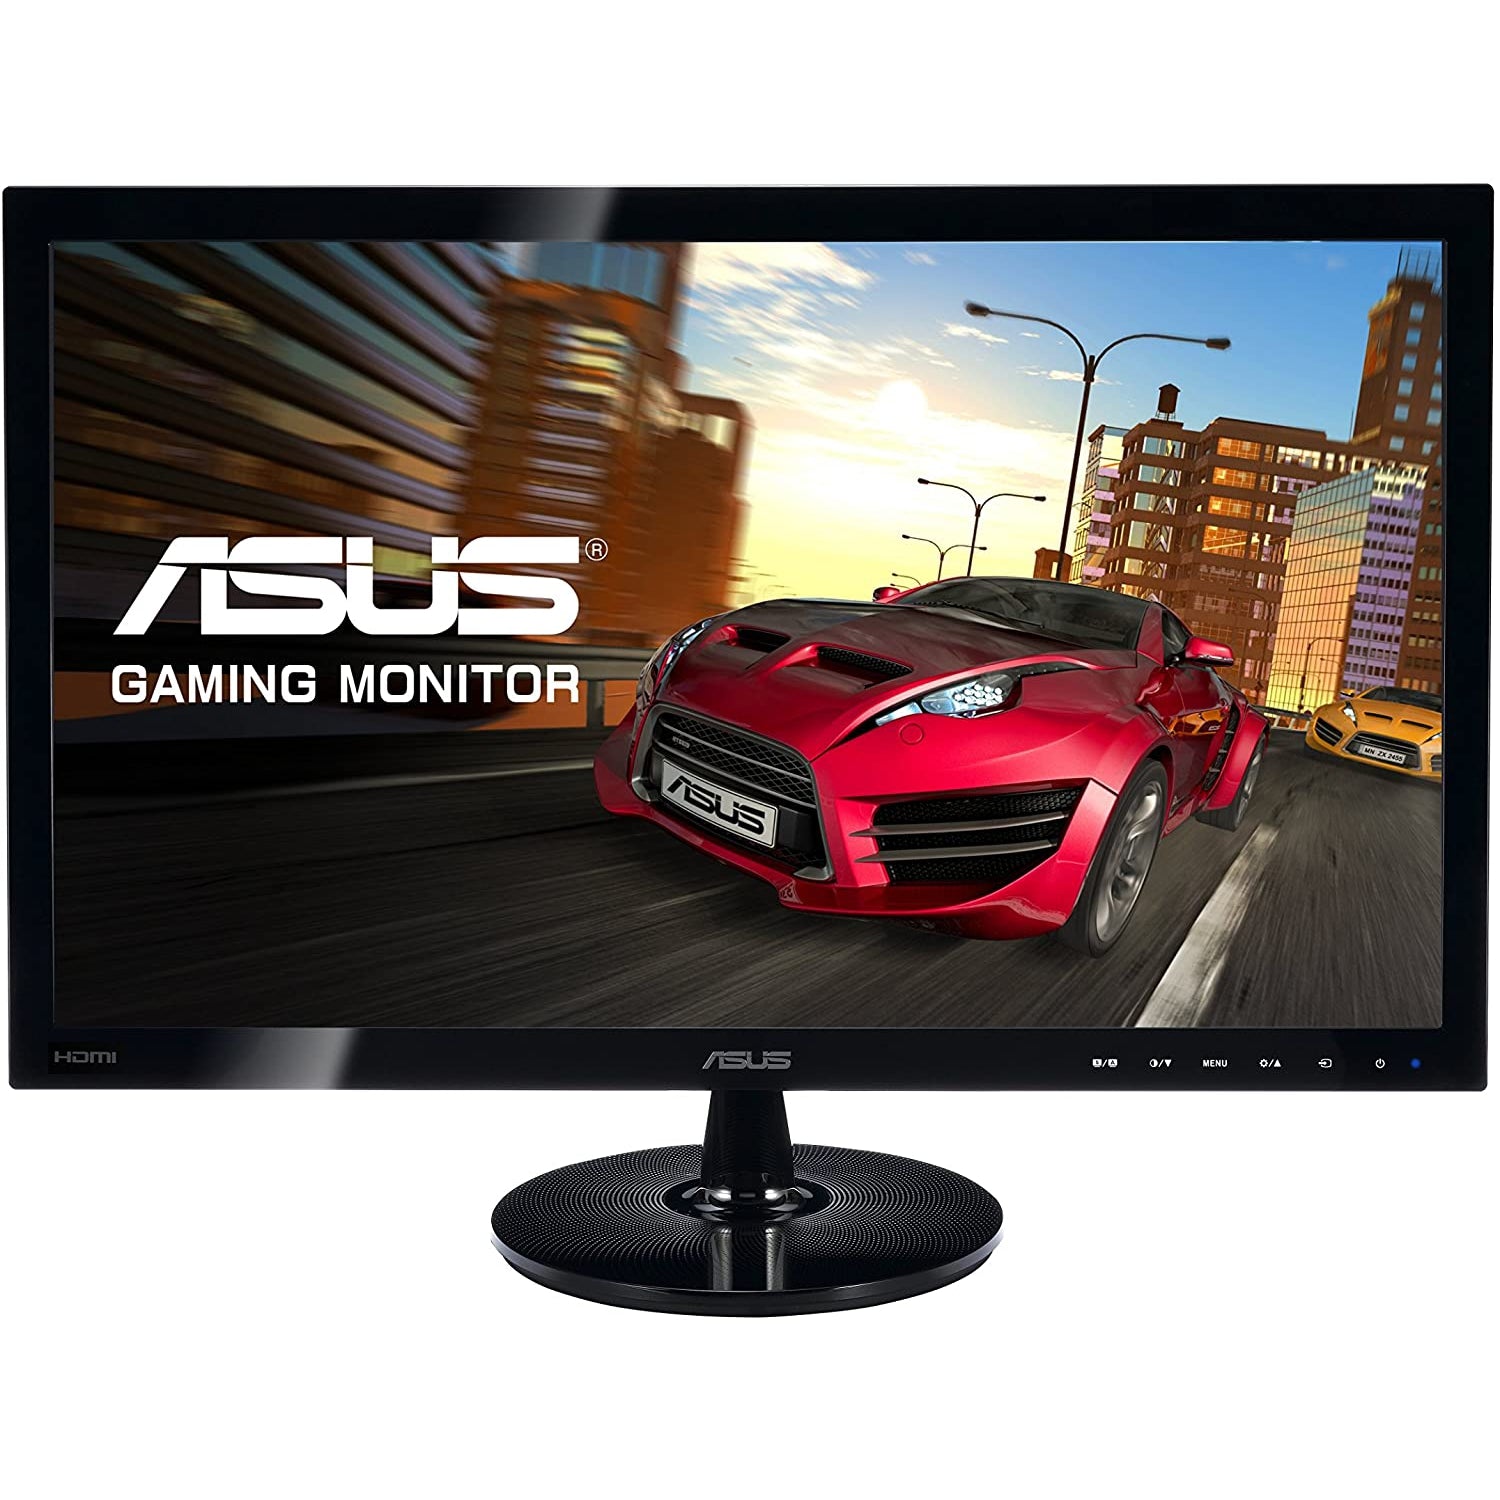 ASUS VS248HR 24 inch Gaming Monitor (1 ms, 1920 x 1080, HDMI, DVI-D, VGA, 250 cd/m2) - Black